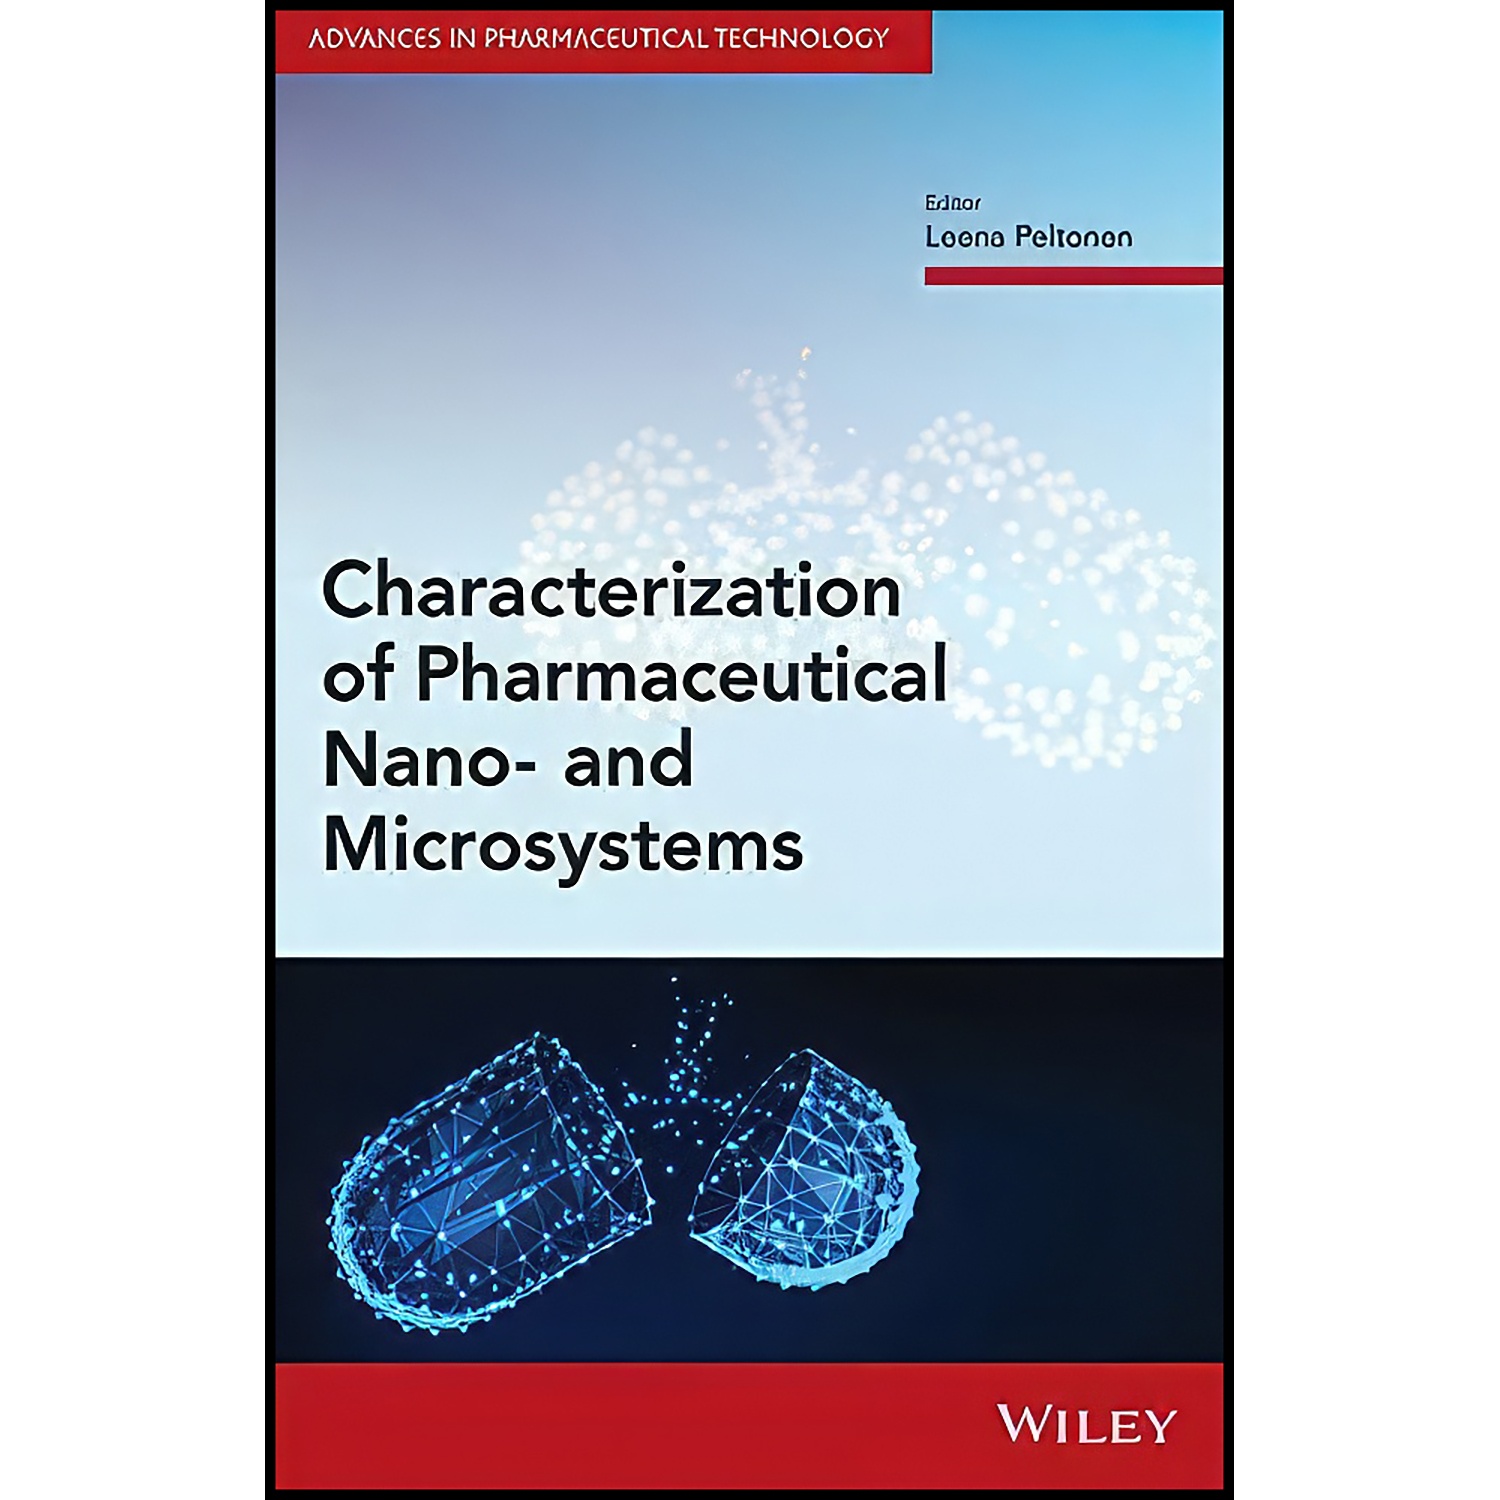 کتاب Characterization of Pharmaceutical Nano- and Microsystems اثر جمعي از نويسندگان انتشارات Wiley